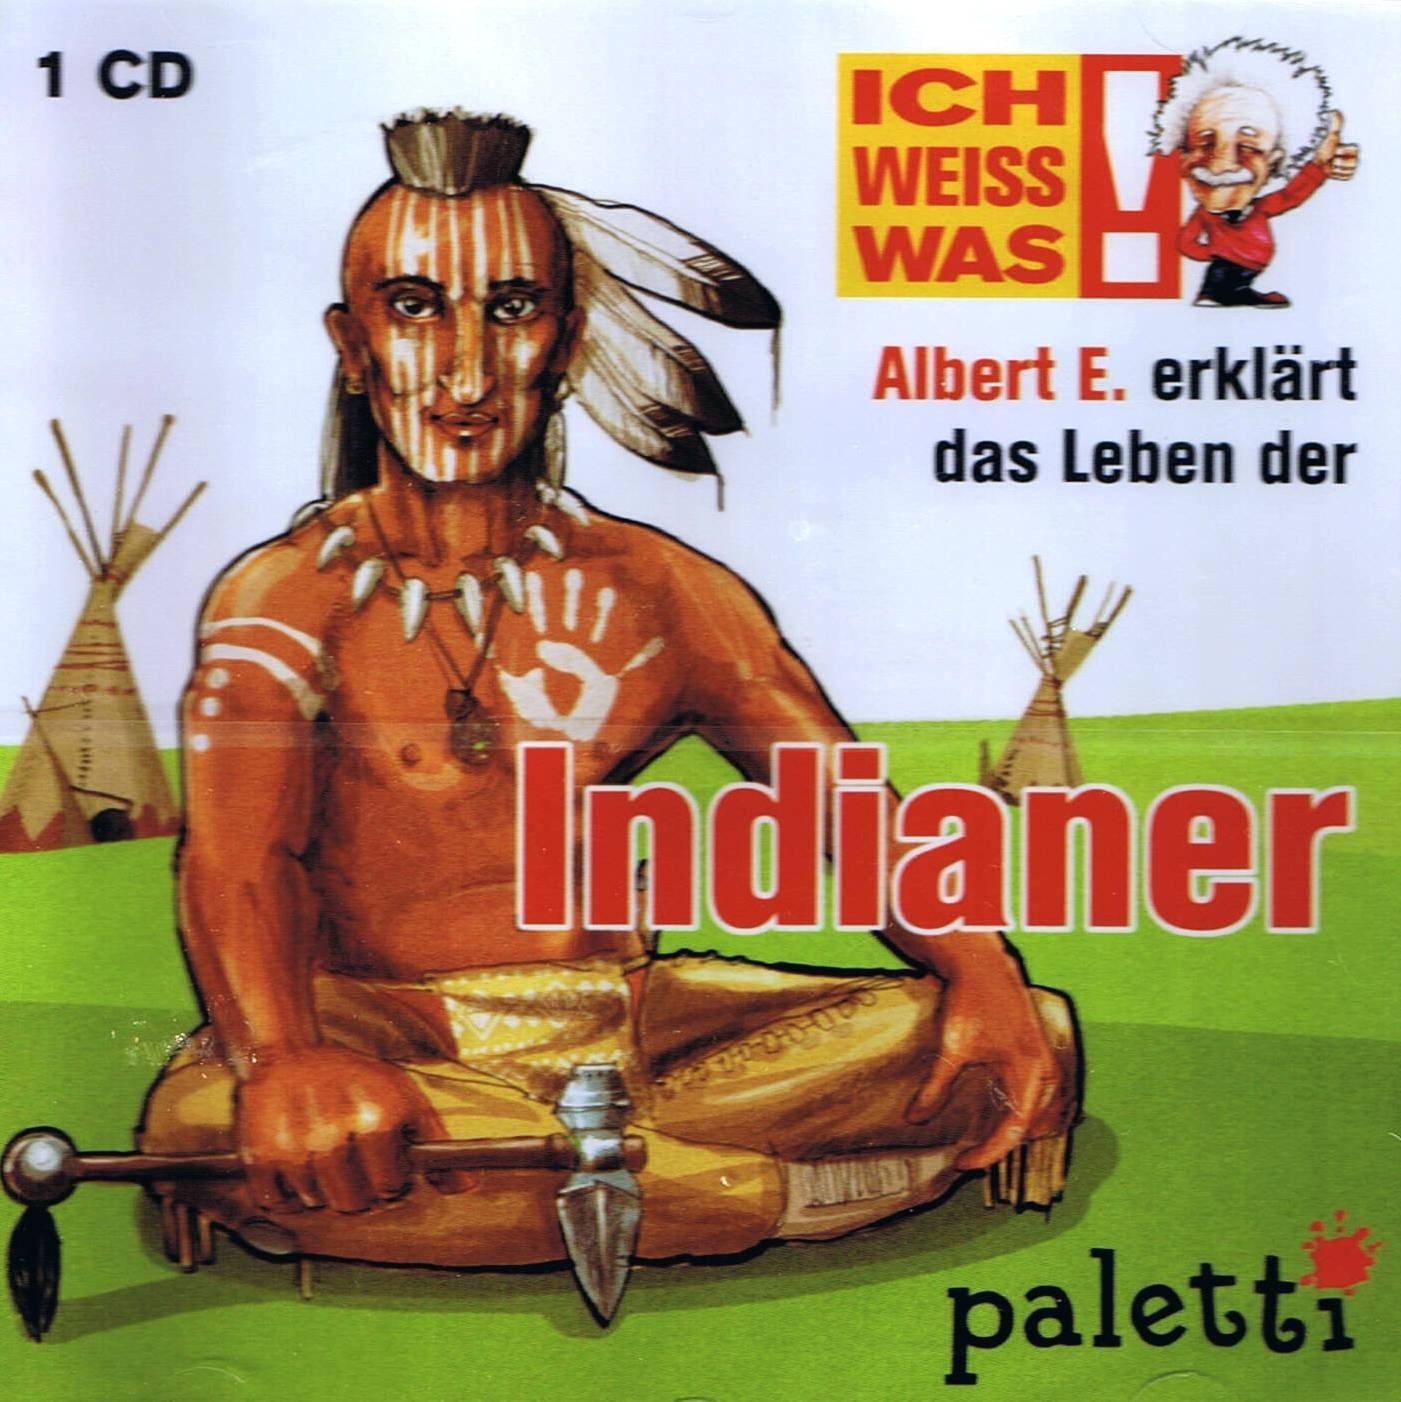 Albert E. erklärt das Leben der Indianer / ICH WEISS WAS! (Neu differenzbesteuert)